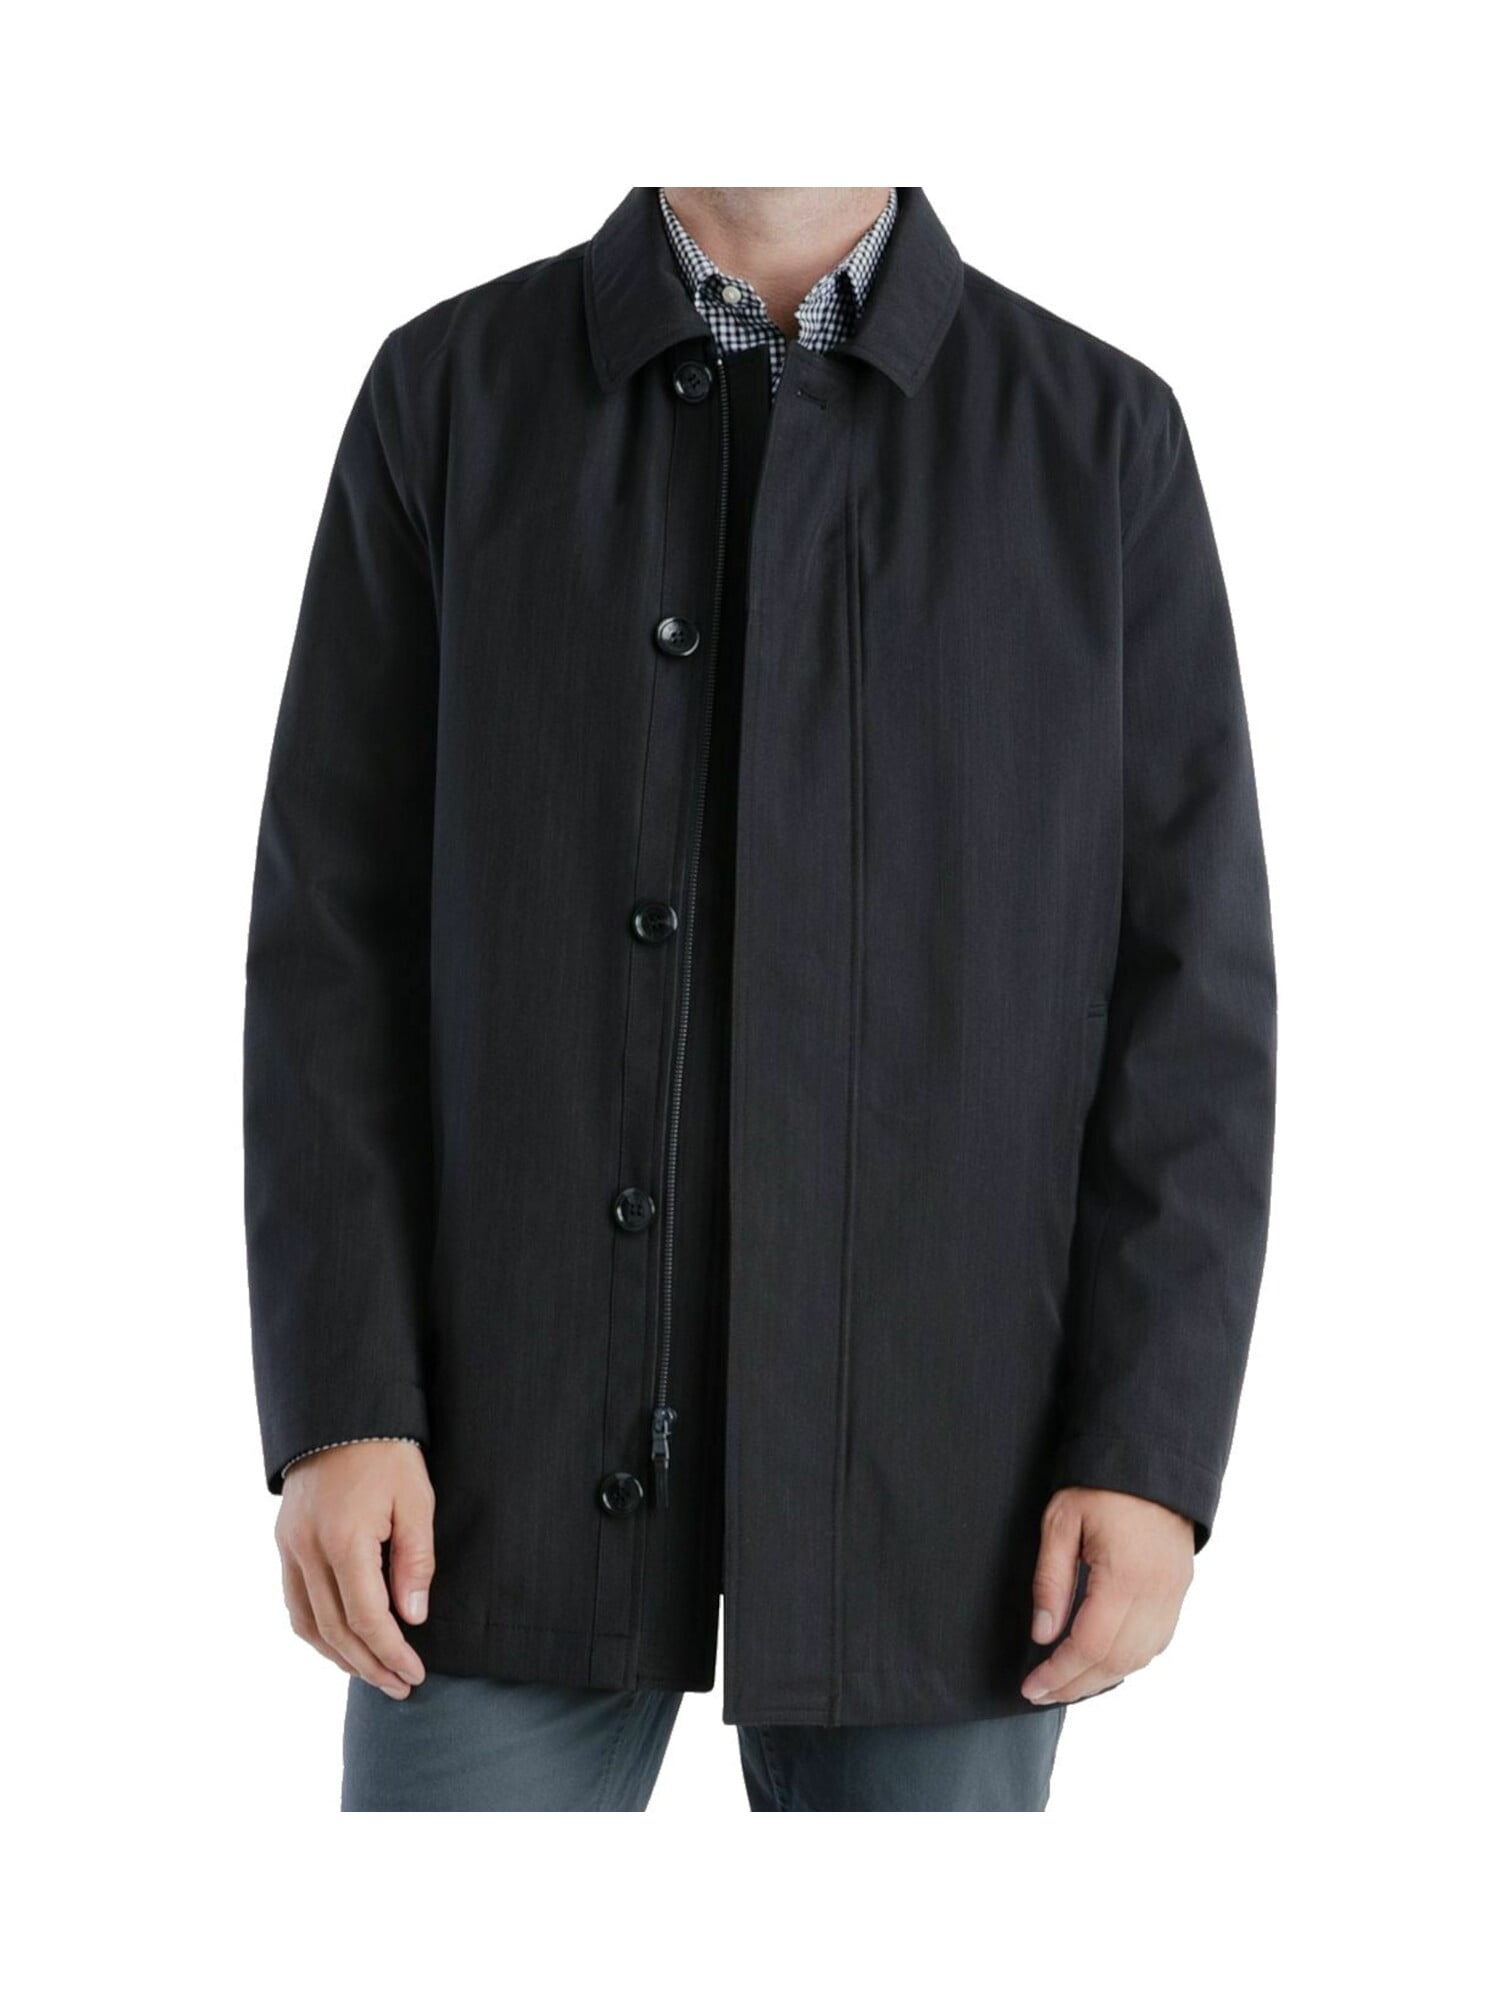 MICHAEL KORS Mens Byron Black Raincoat Jacket 44S - Walmart.com